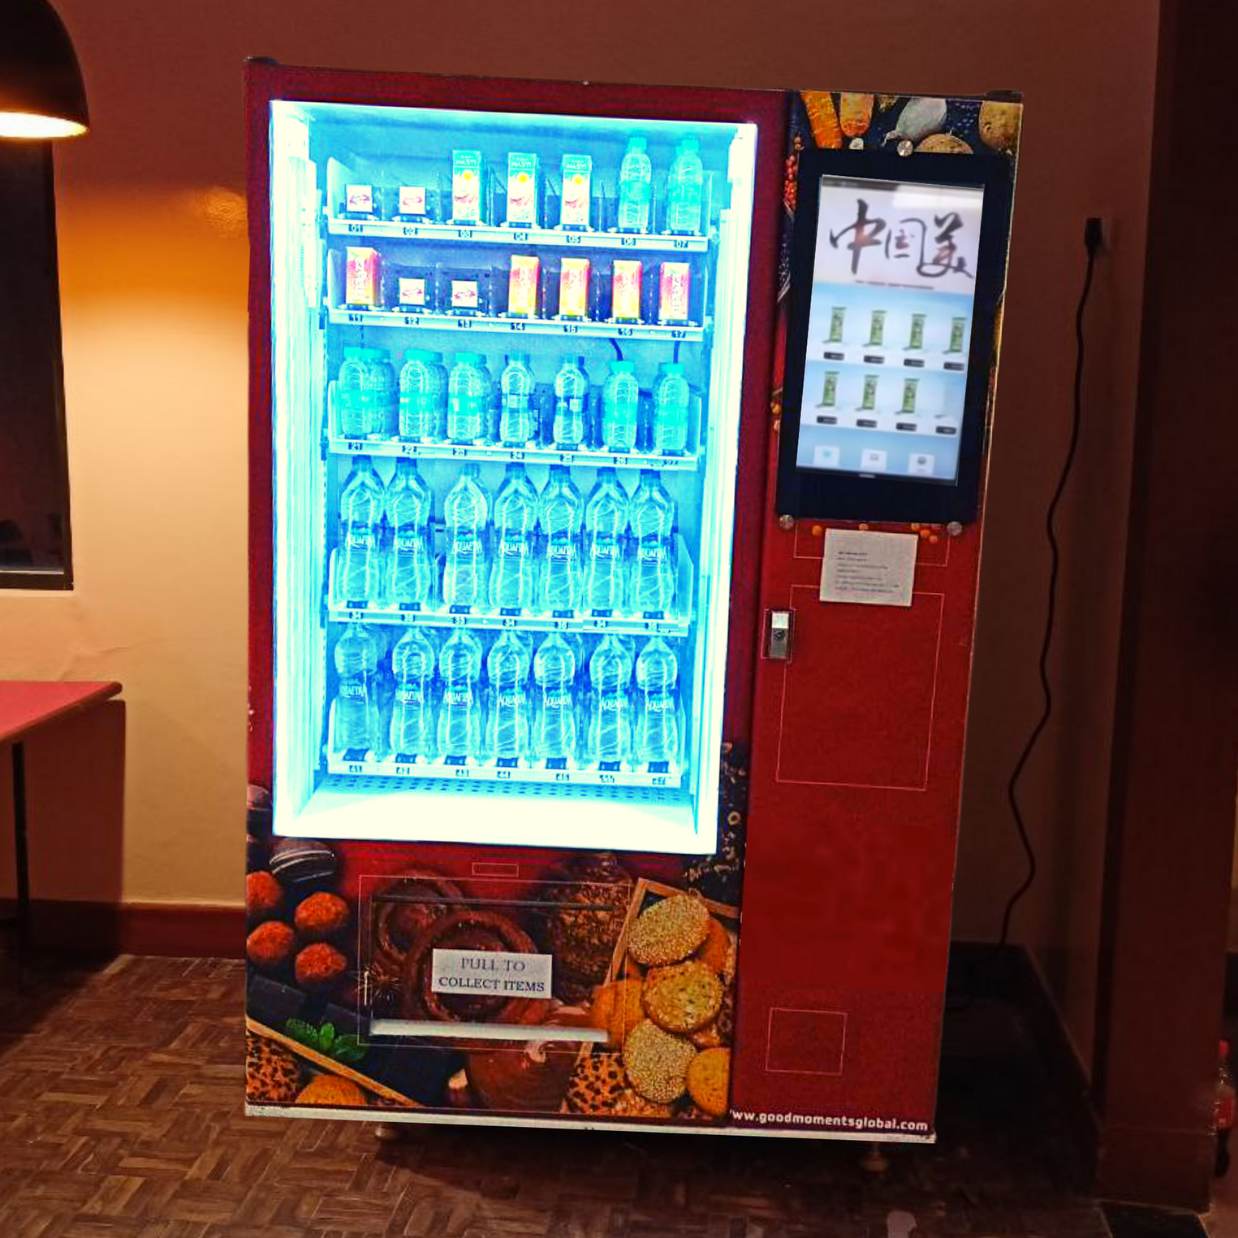 Wendor Nova - Elevator Vending Machine